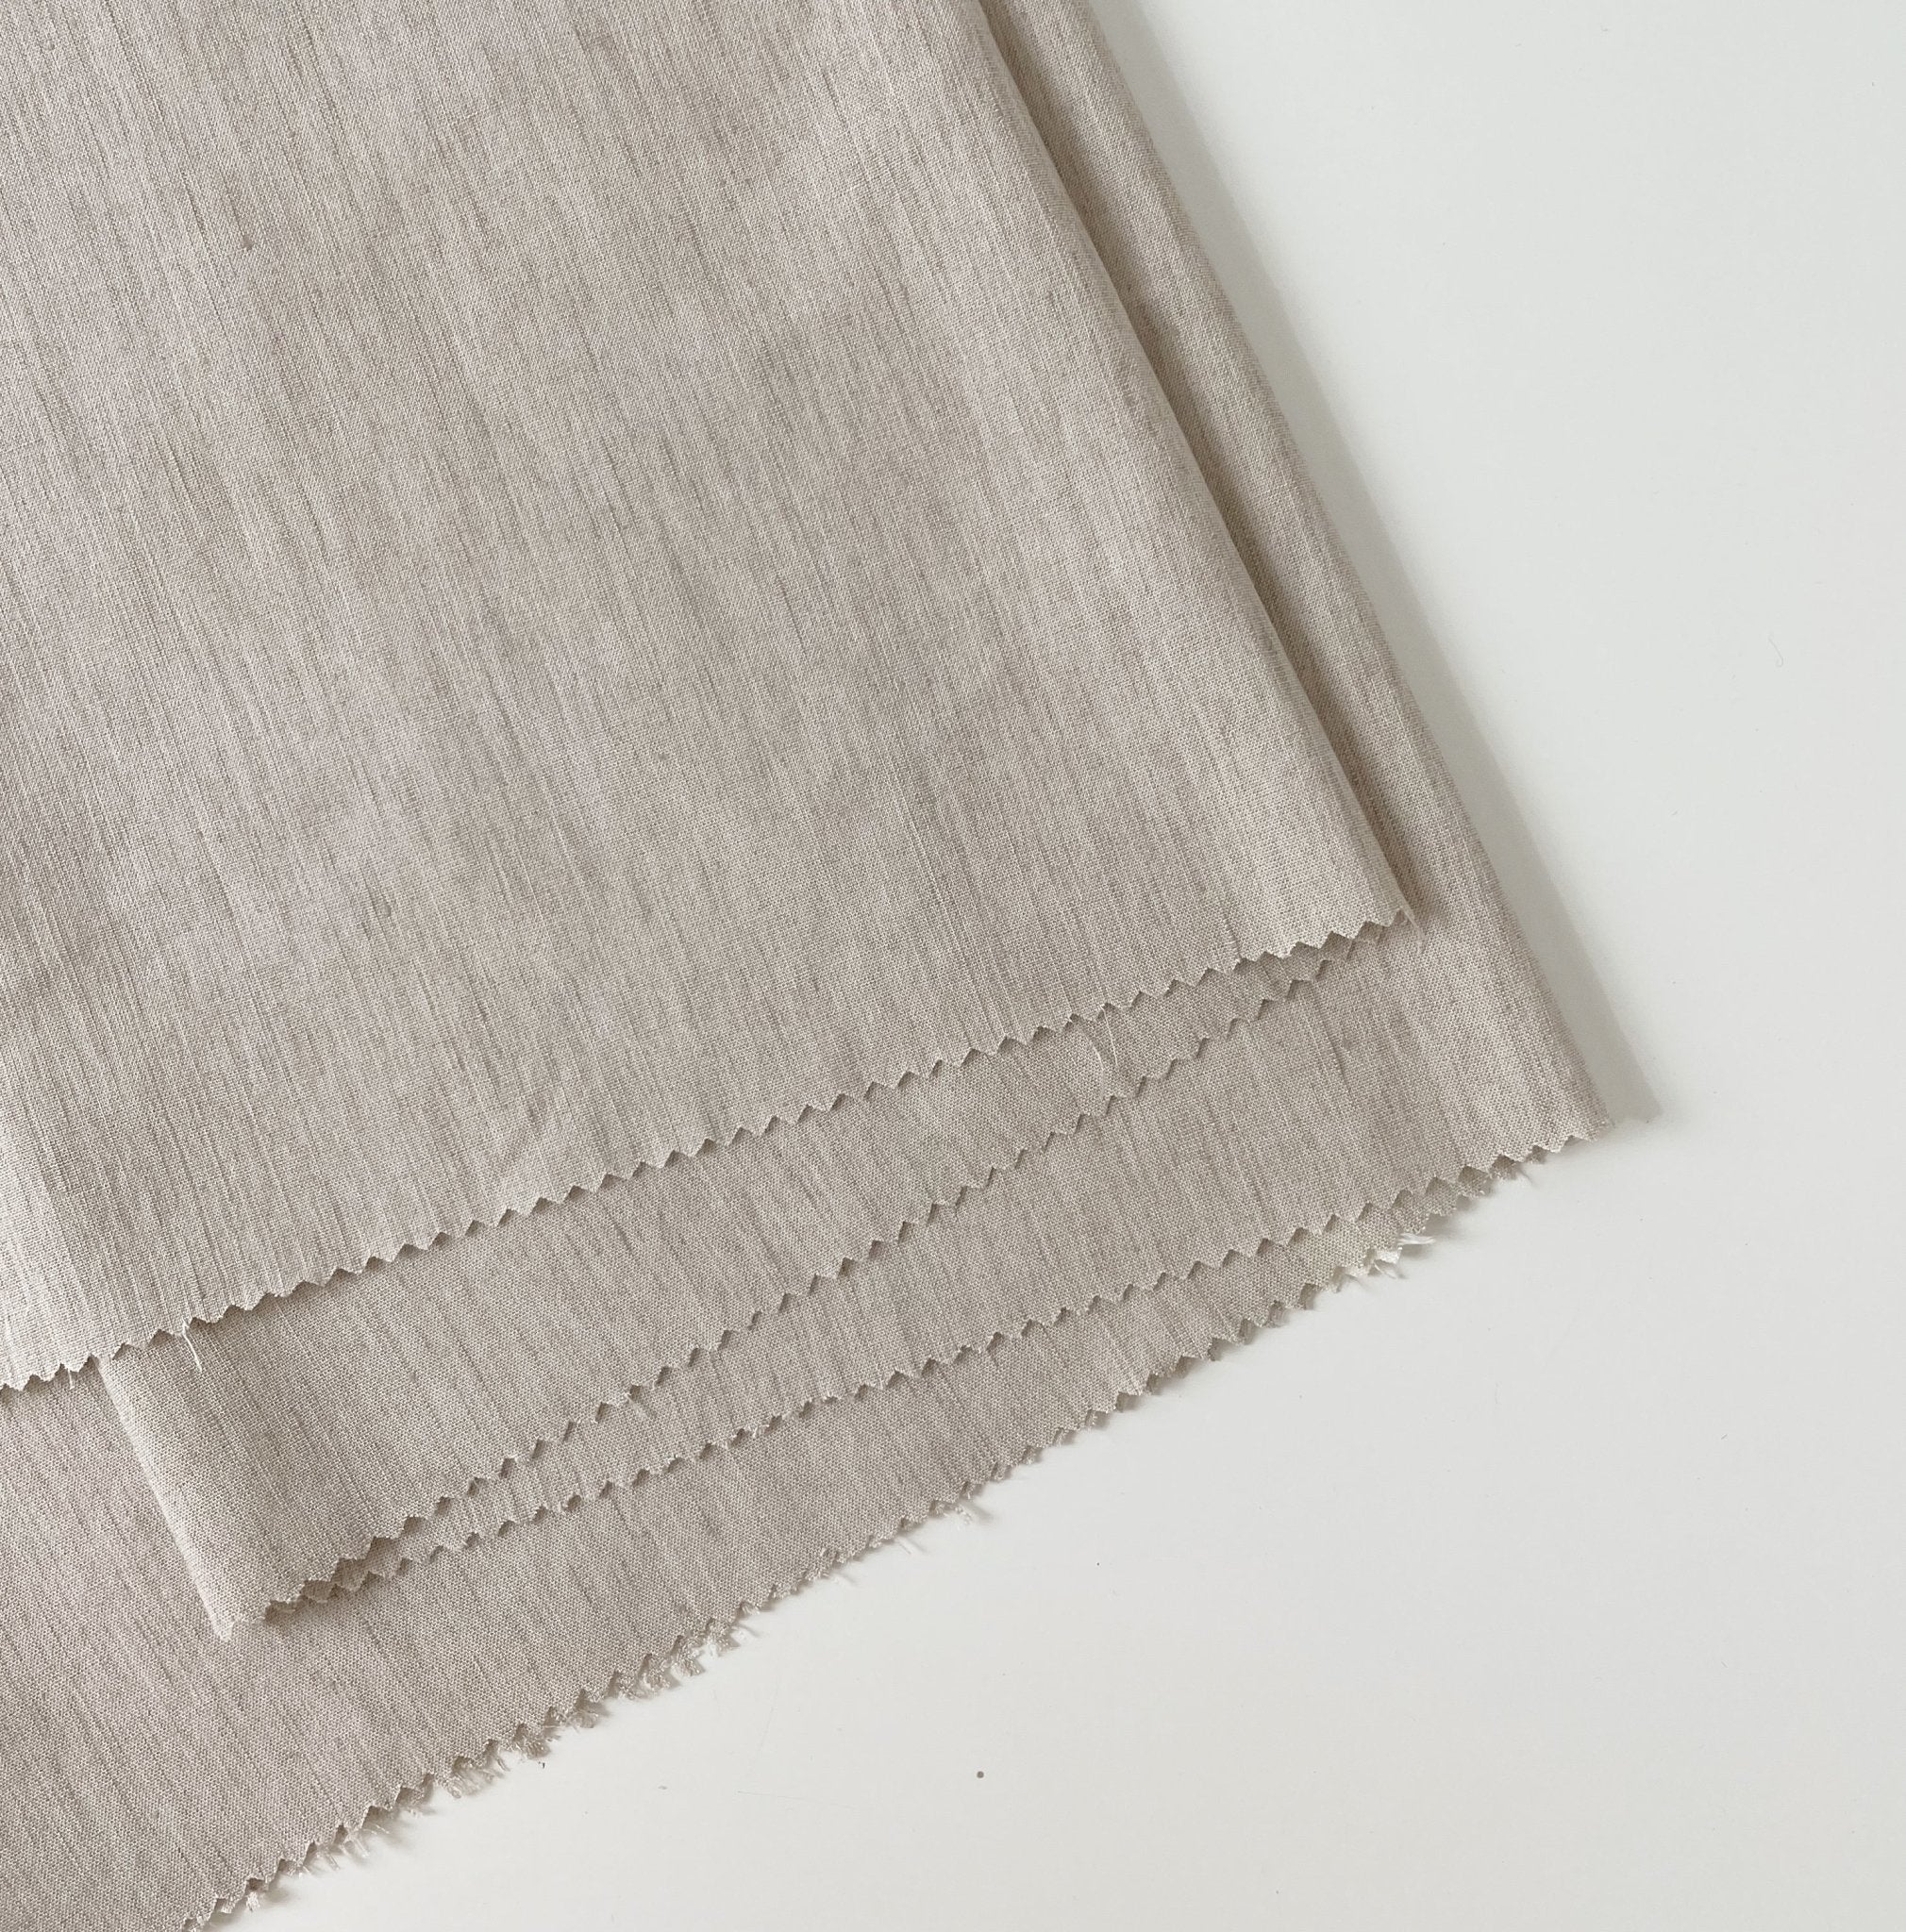 Linen Rayon Strech Melange Fabric 6638 6812 6811 6843 - The Linen Lab - BROWN 6843